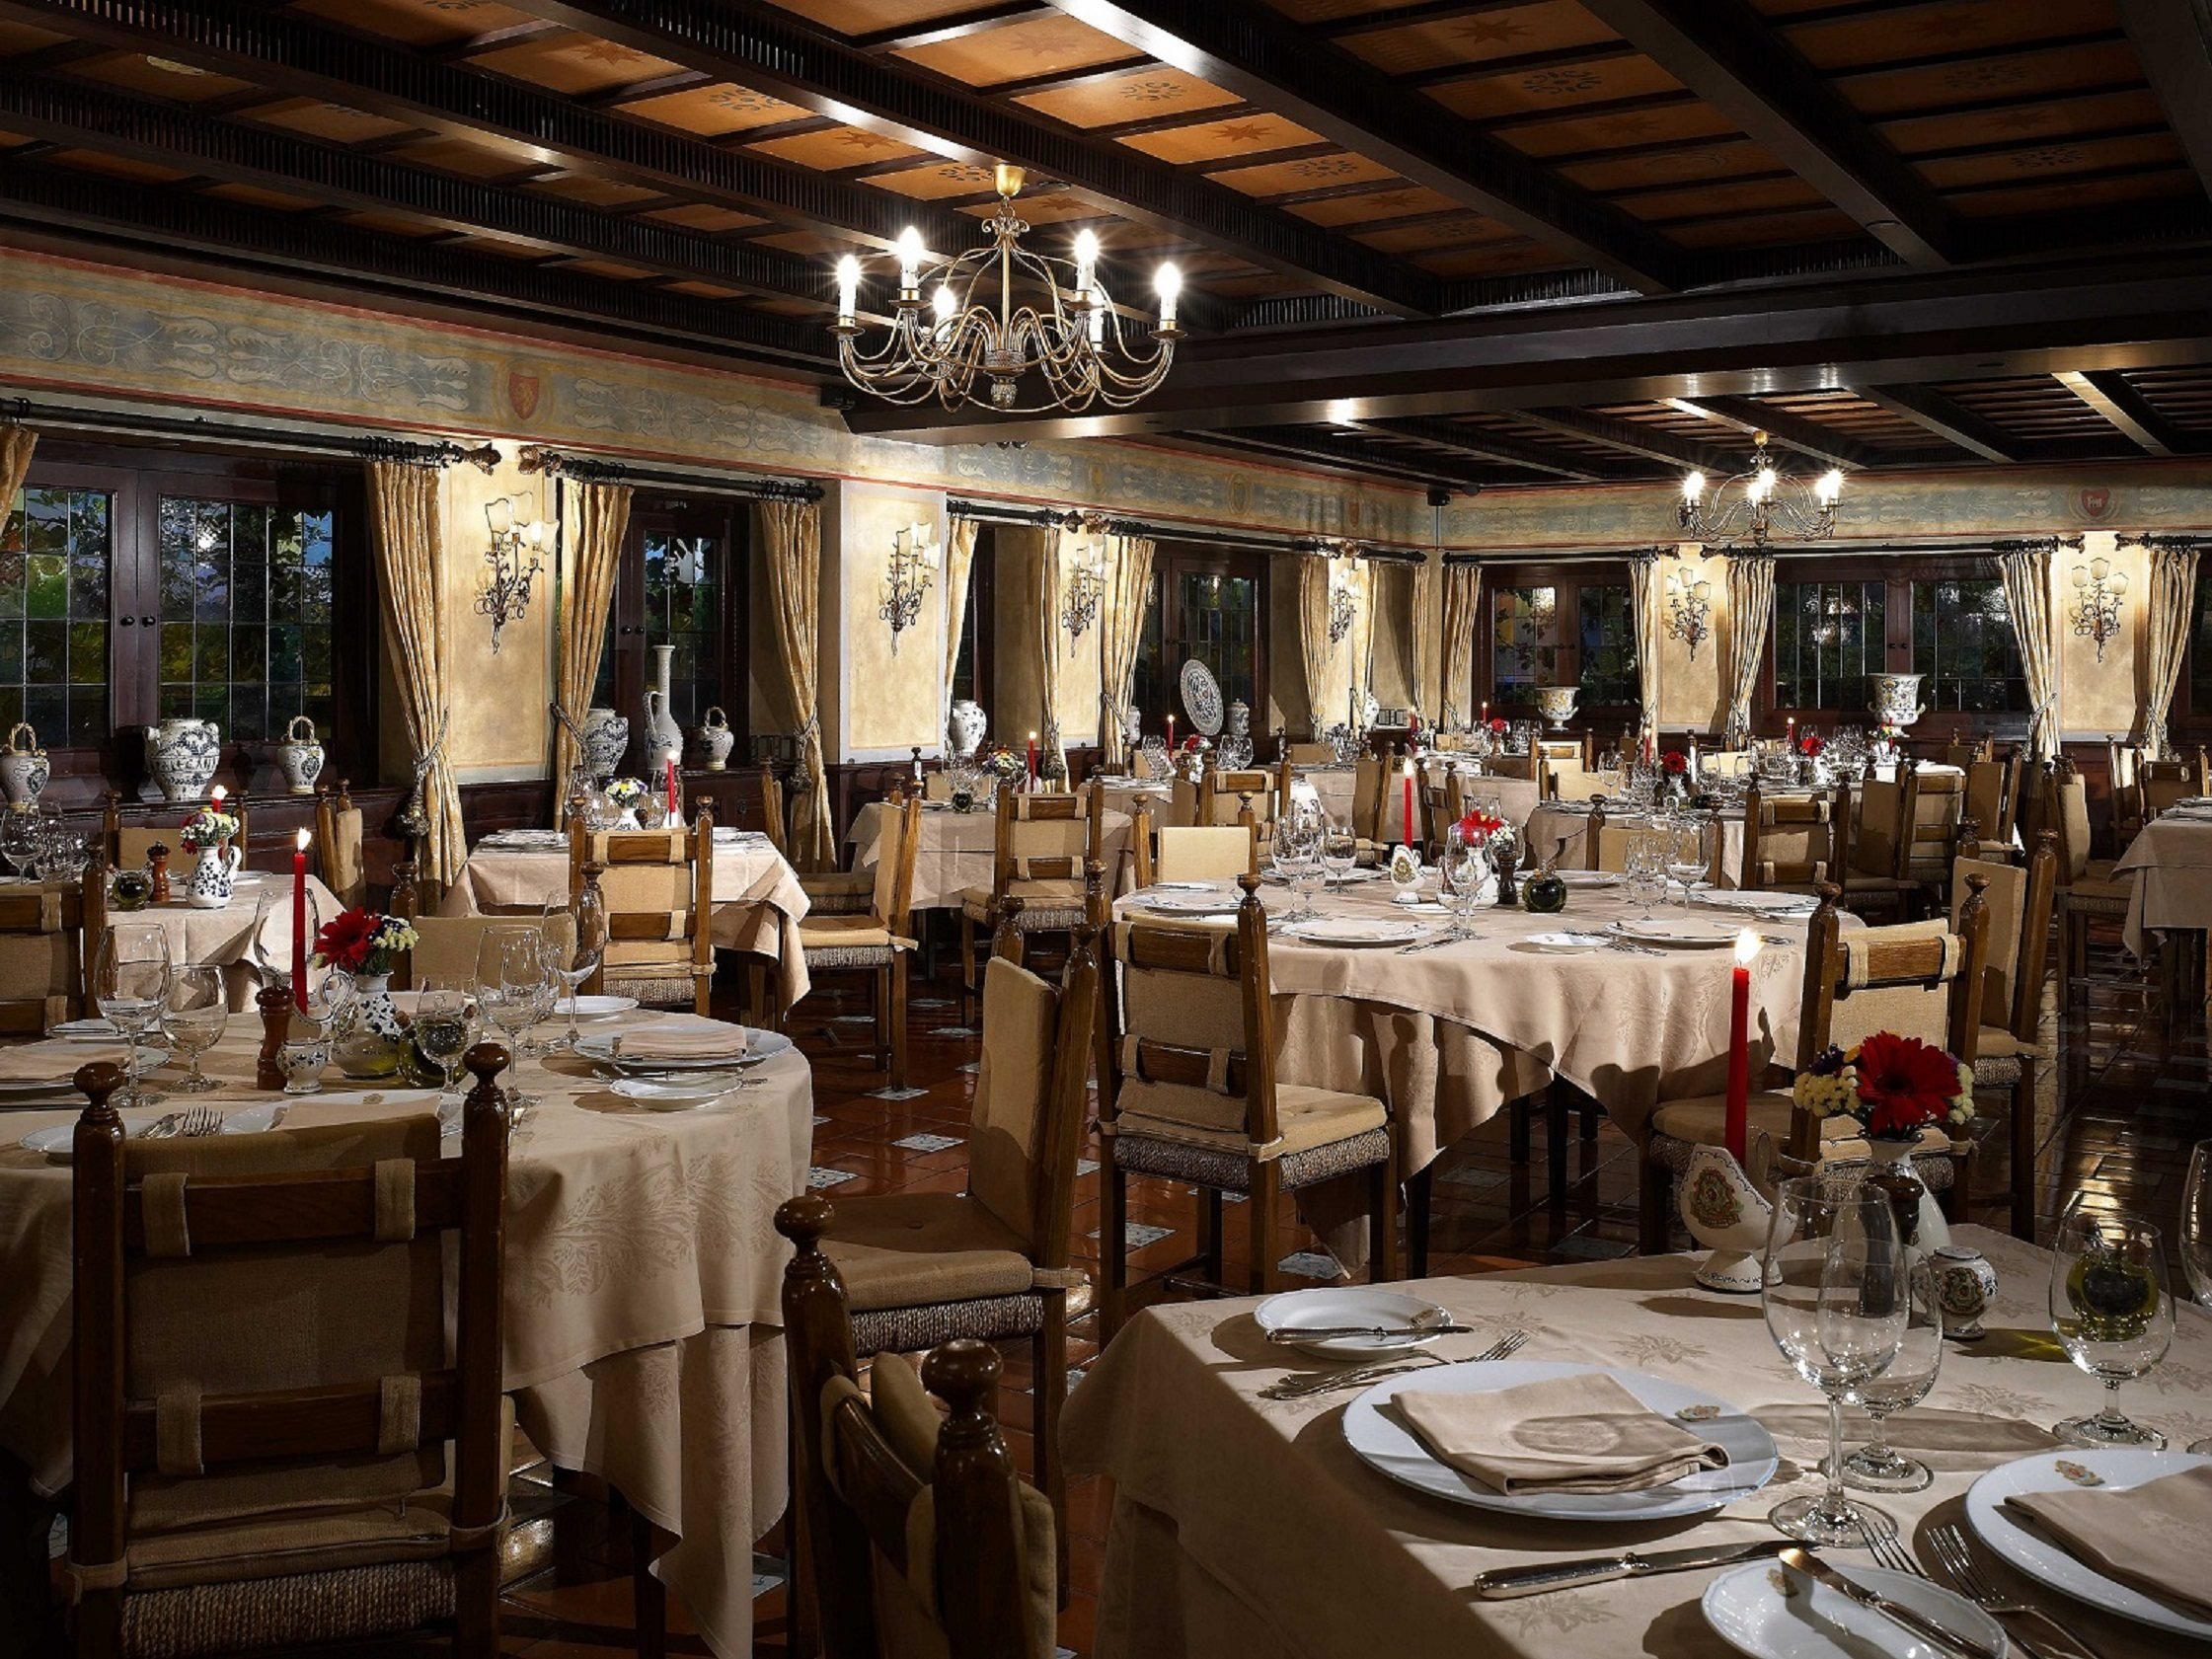 Sabatini Ristorante Italiano’s interiors exude an old-world charm. Photo: Royal Garden Hong Kong 